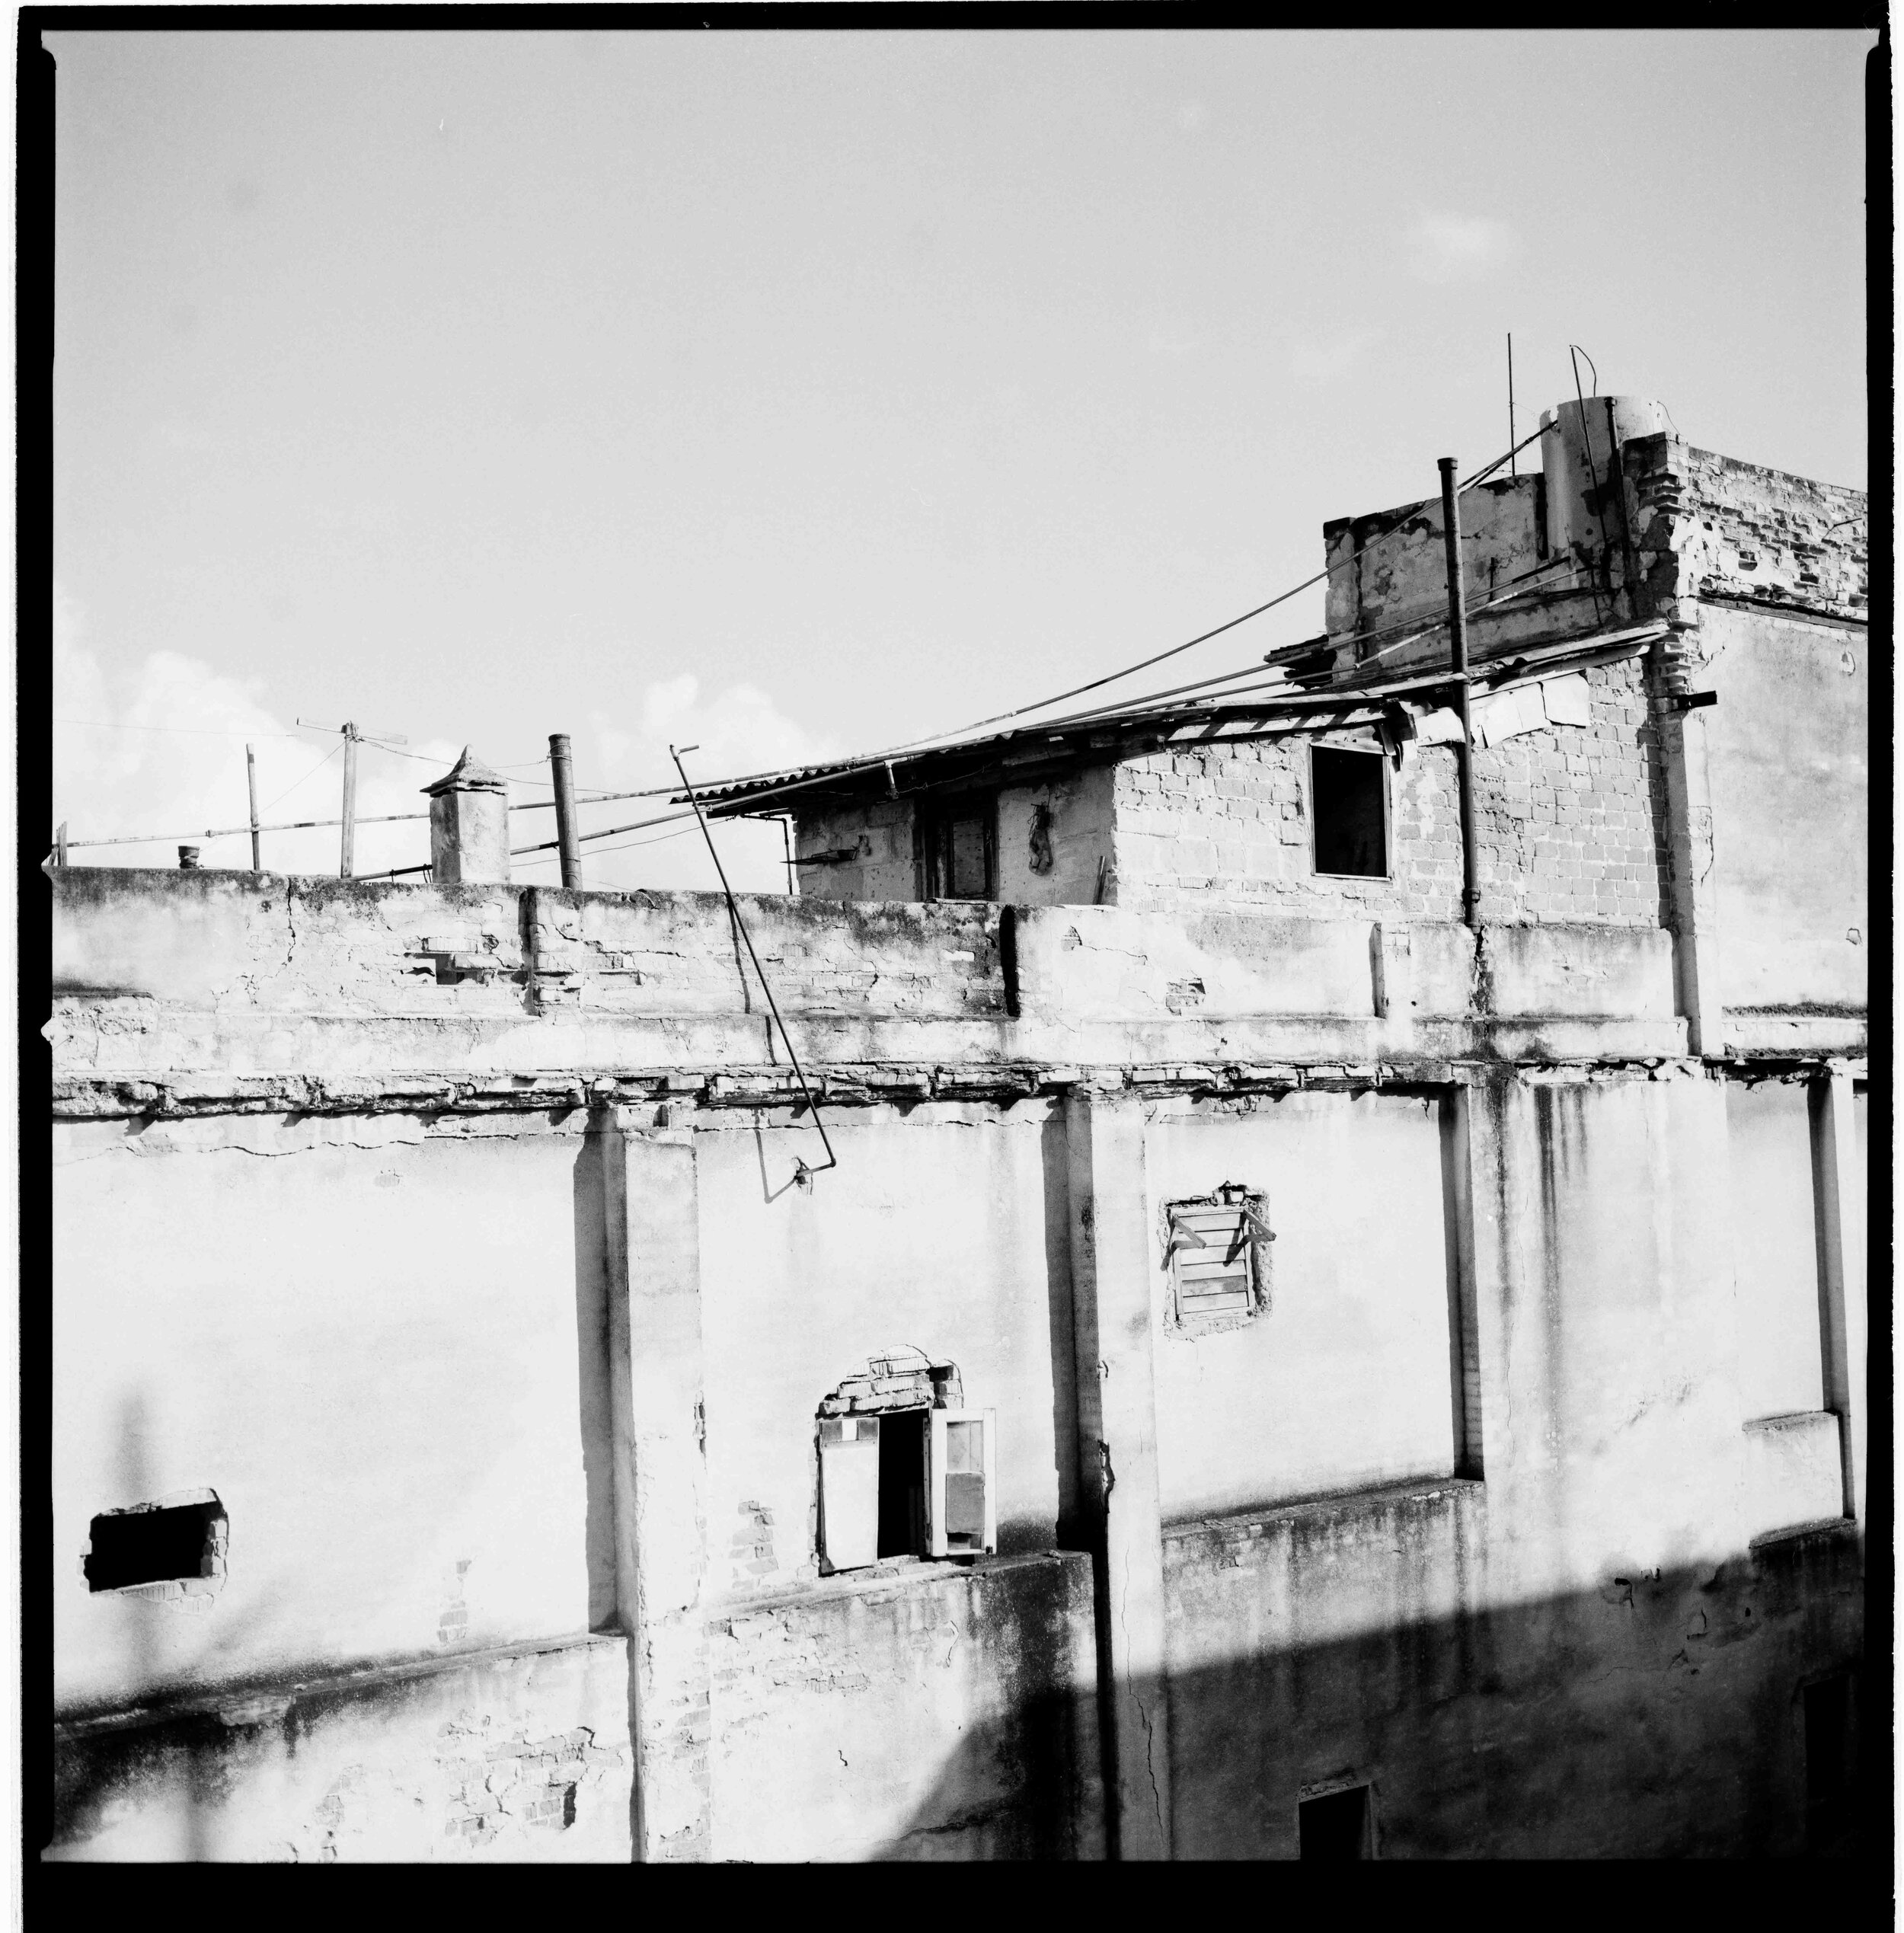 Cuba_apartment building-2.jpg